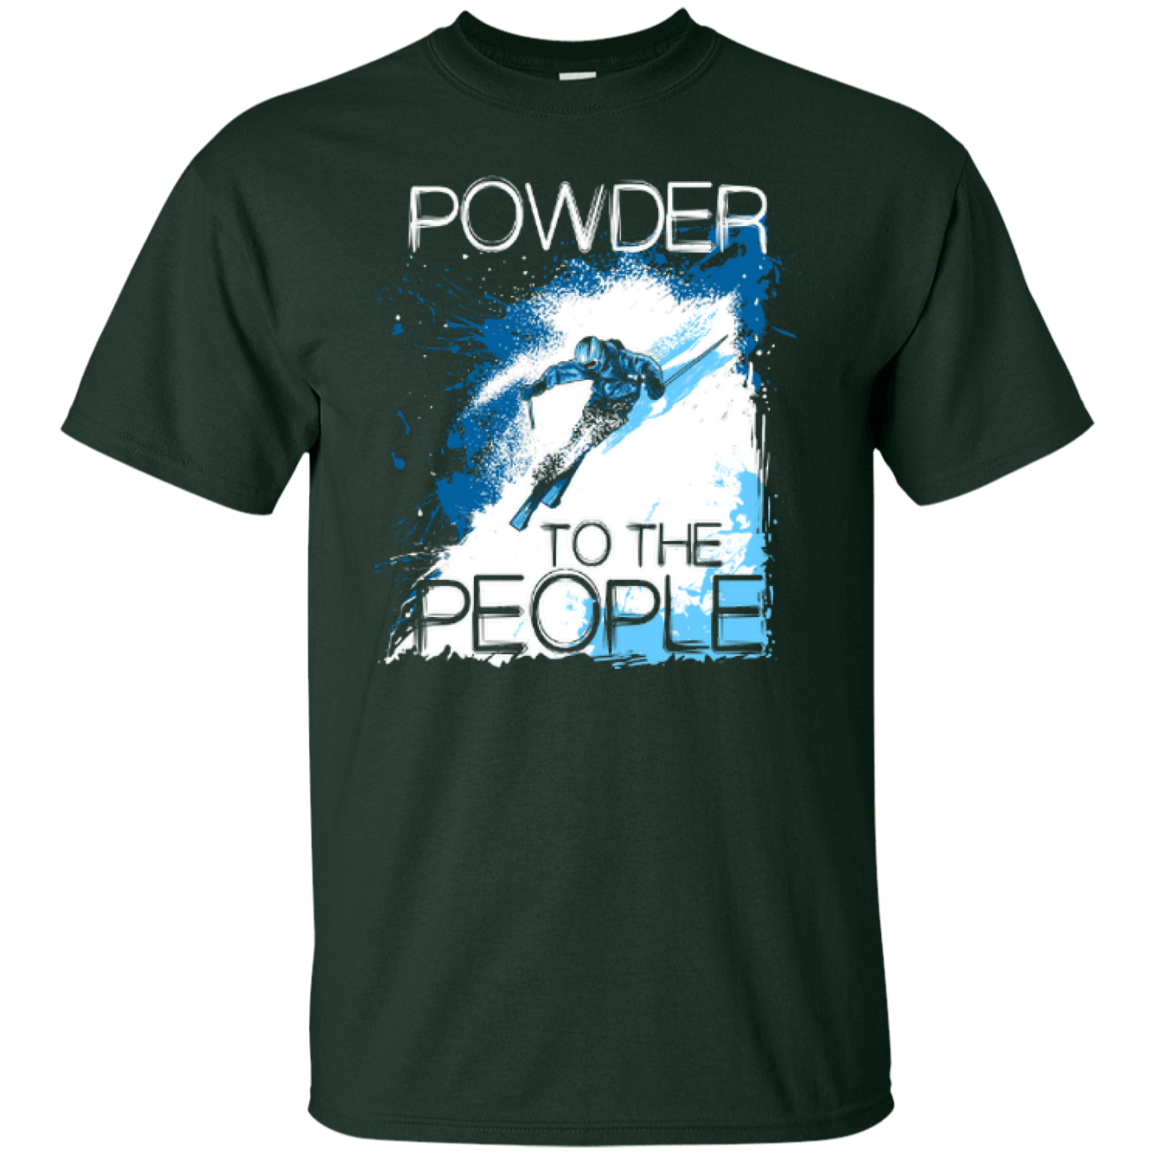 Powder To The People Tees - Powderaddicts